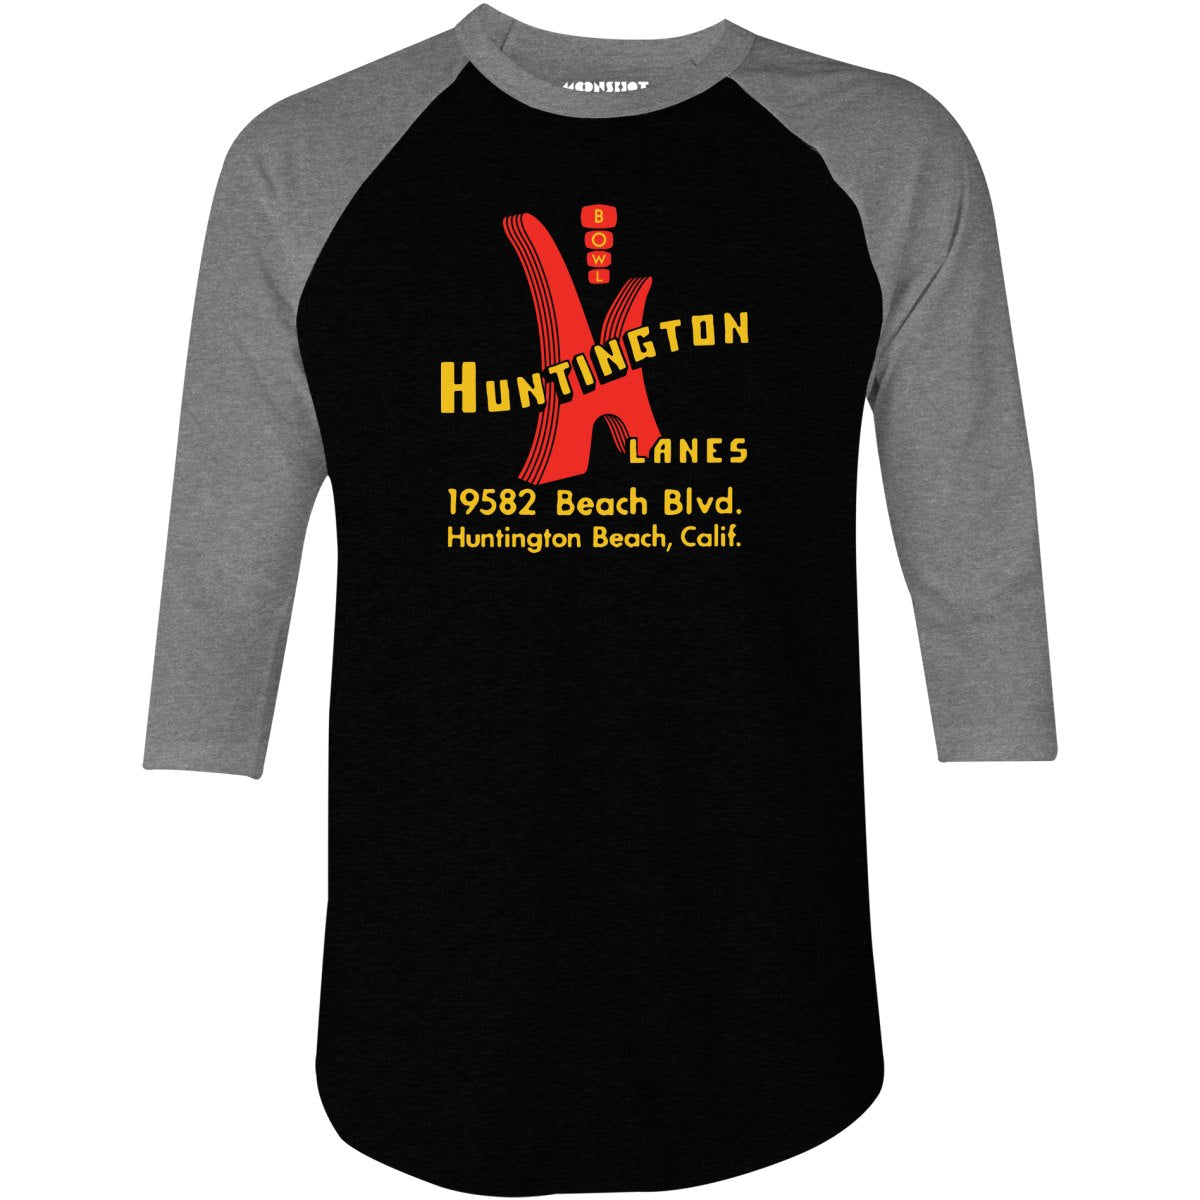 Huntington Lanes - Huntington Beach, CA - Vintage Bowling Alley - 3/4 Sleeve Raglan T-Shirt